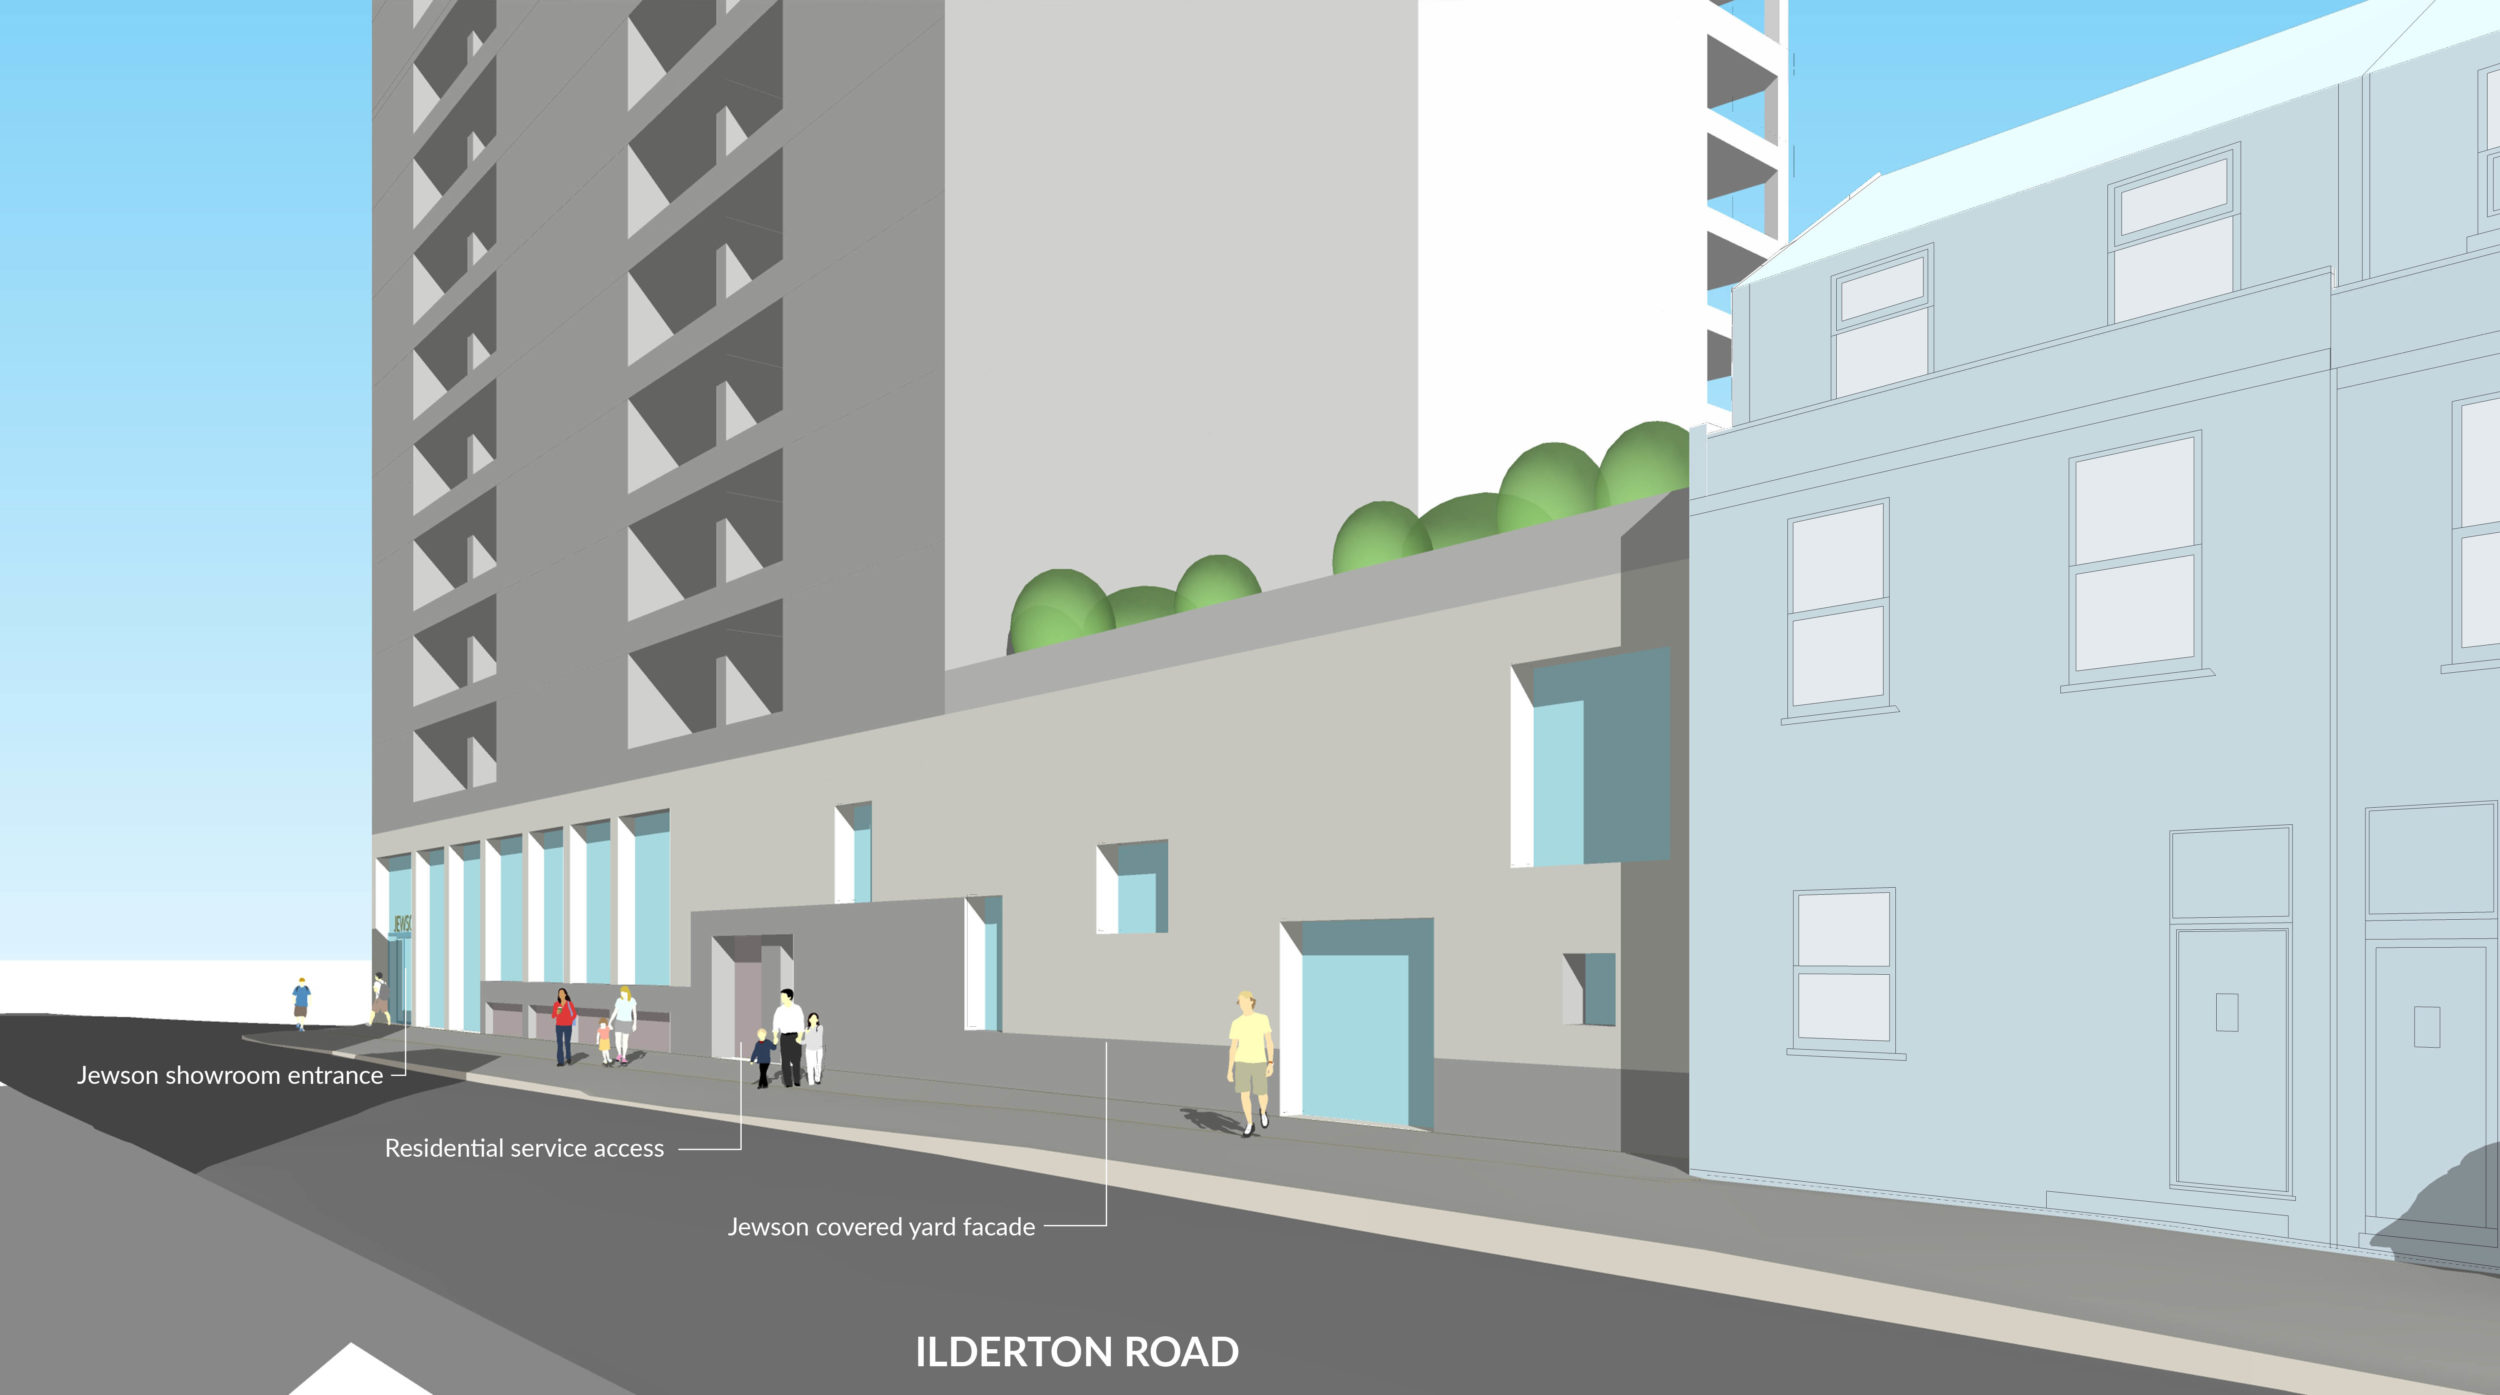 Illustration of the proposed Jewson development